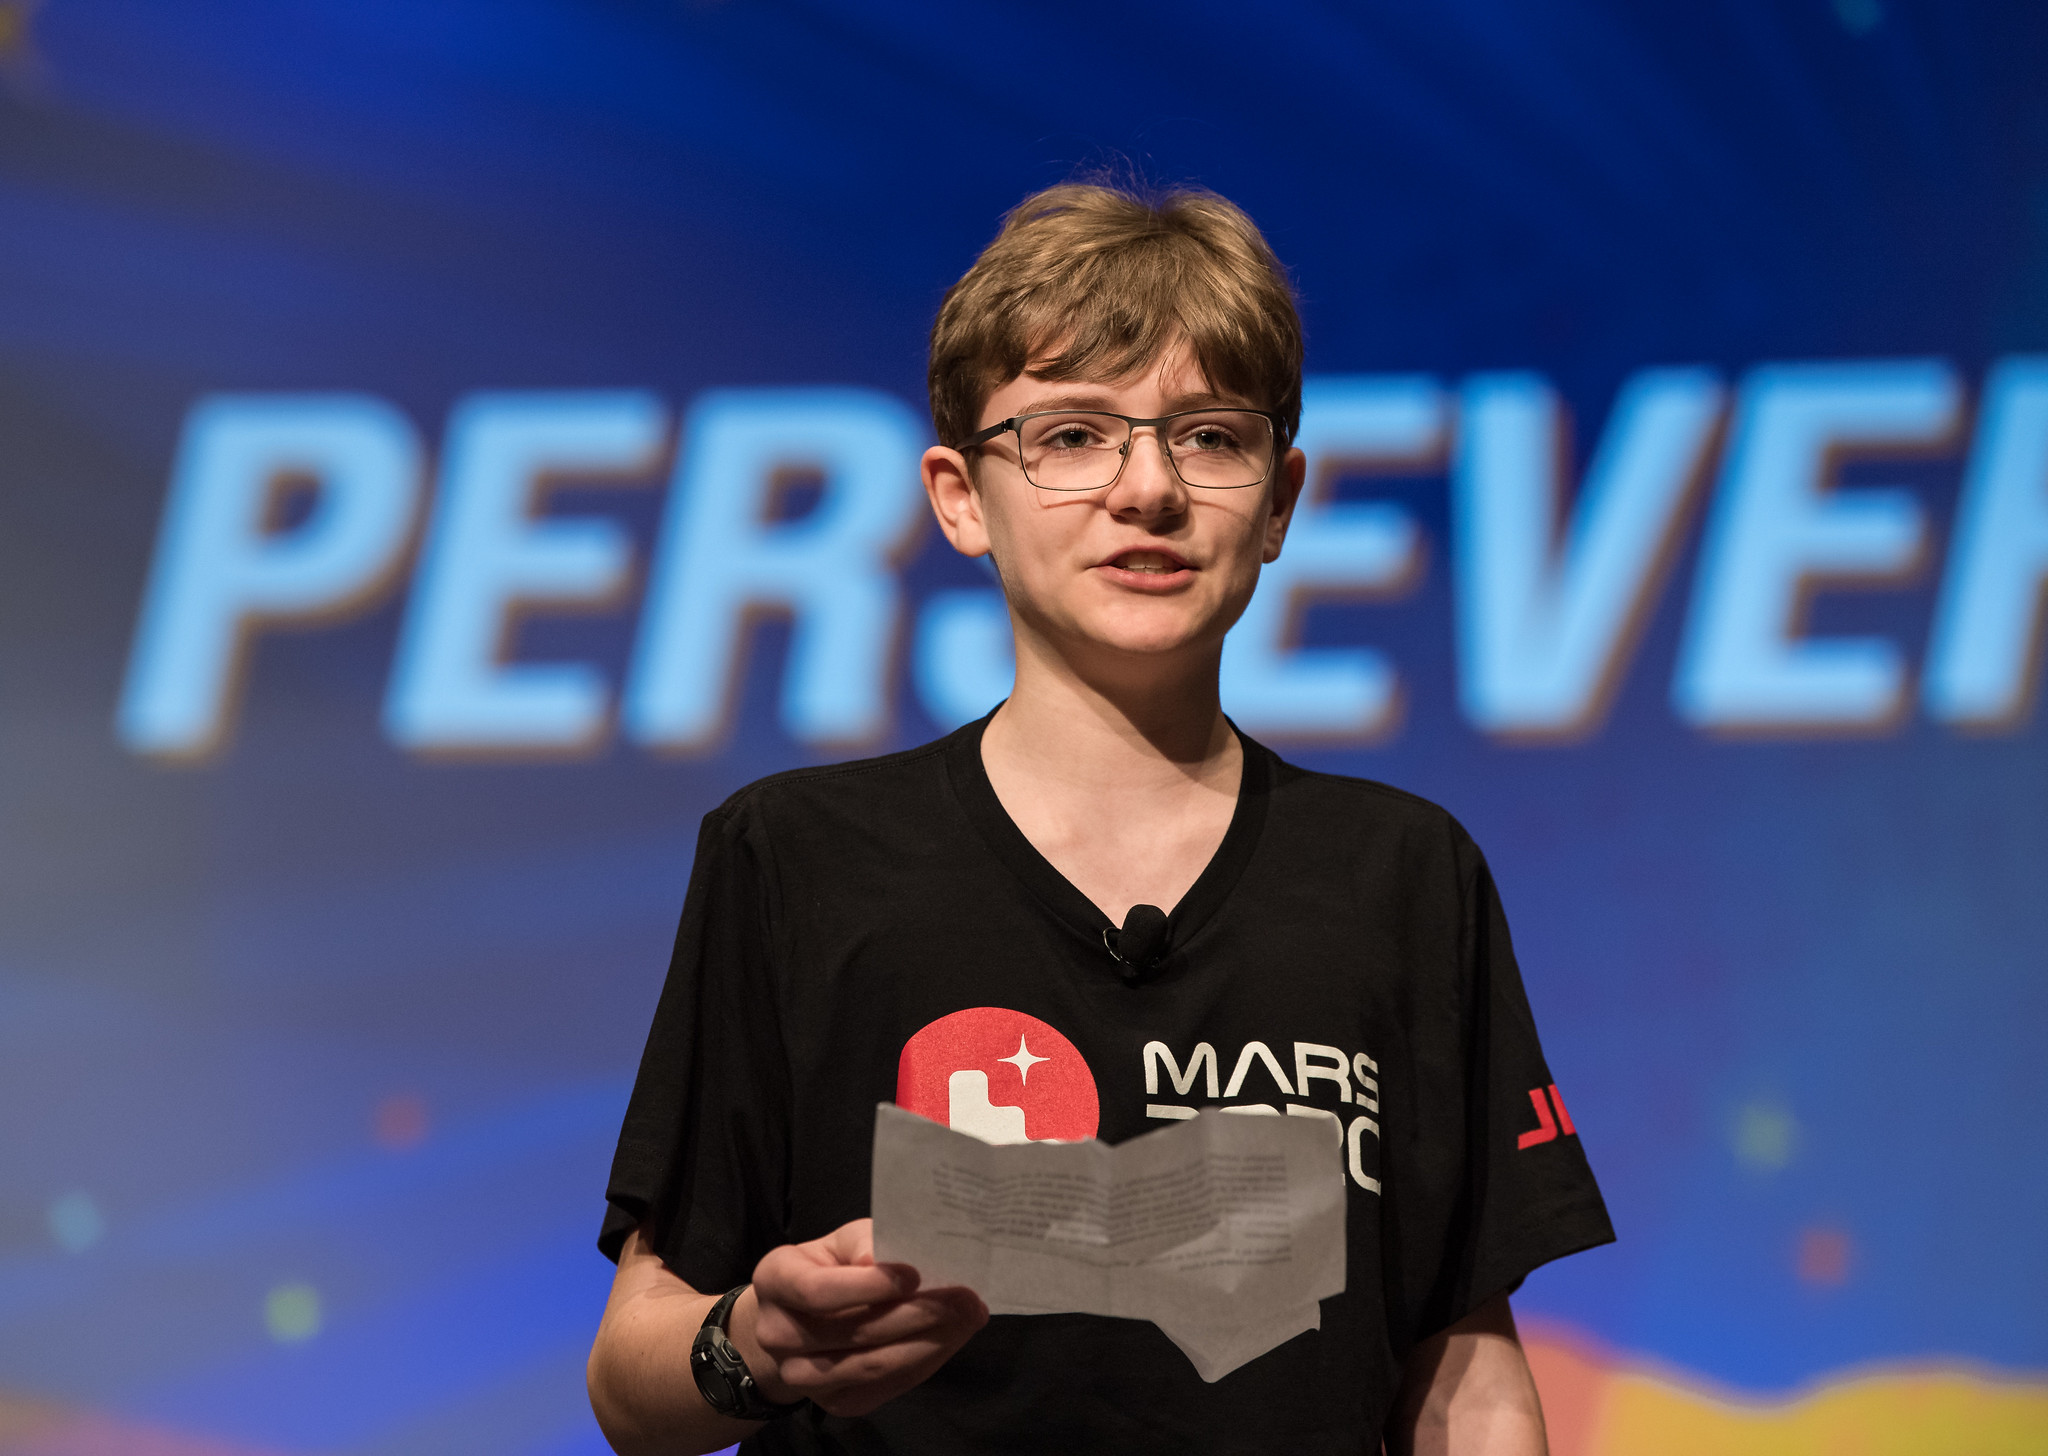 Perseverance – 7th Grader Chosen to Name NASA’s Mars 2020 Rover